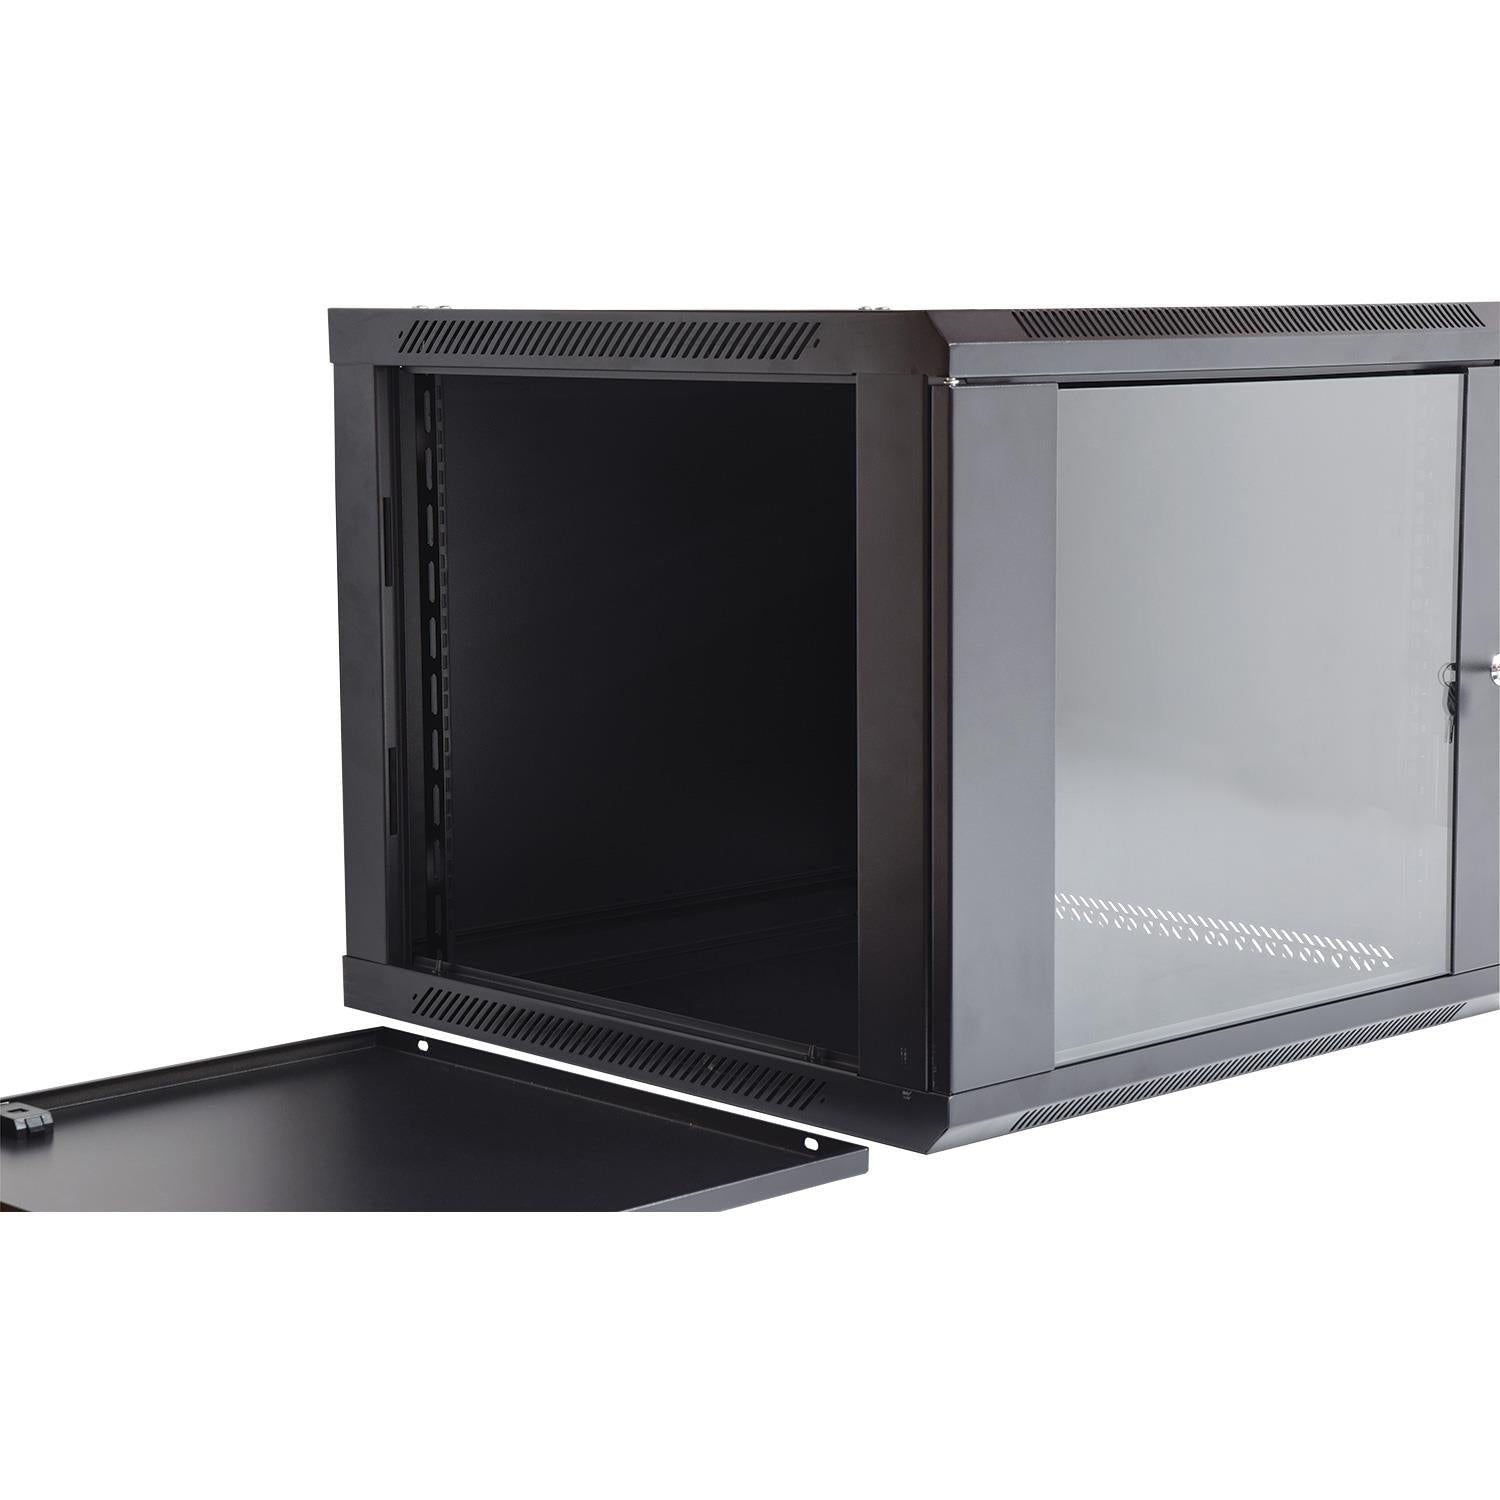 19" Rack Cabinet 6u x 600mm Deep - DY Pro Audio